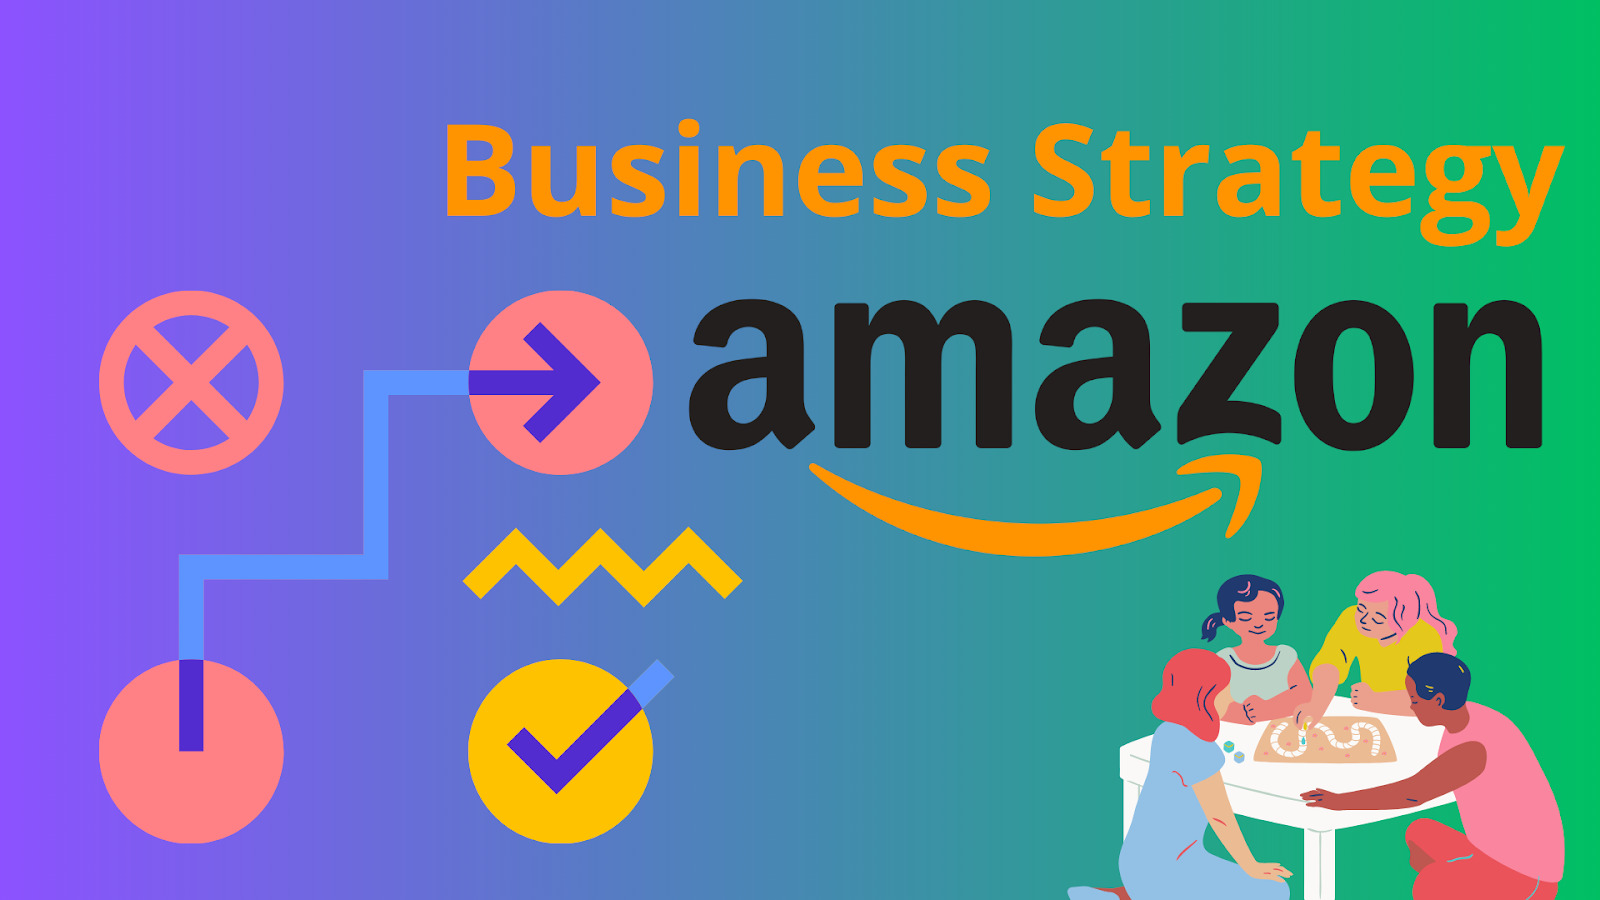 A winning strategy to start a business on Amazon